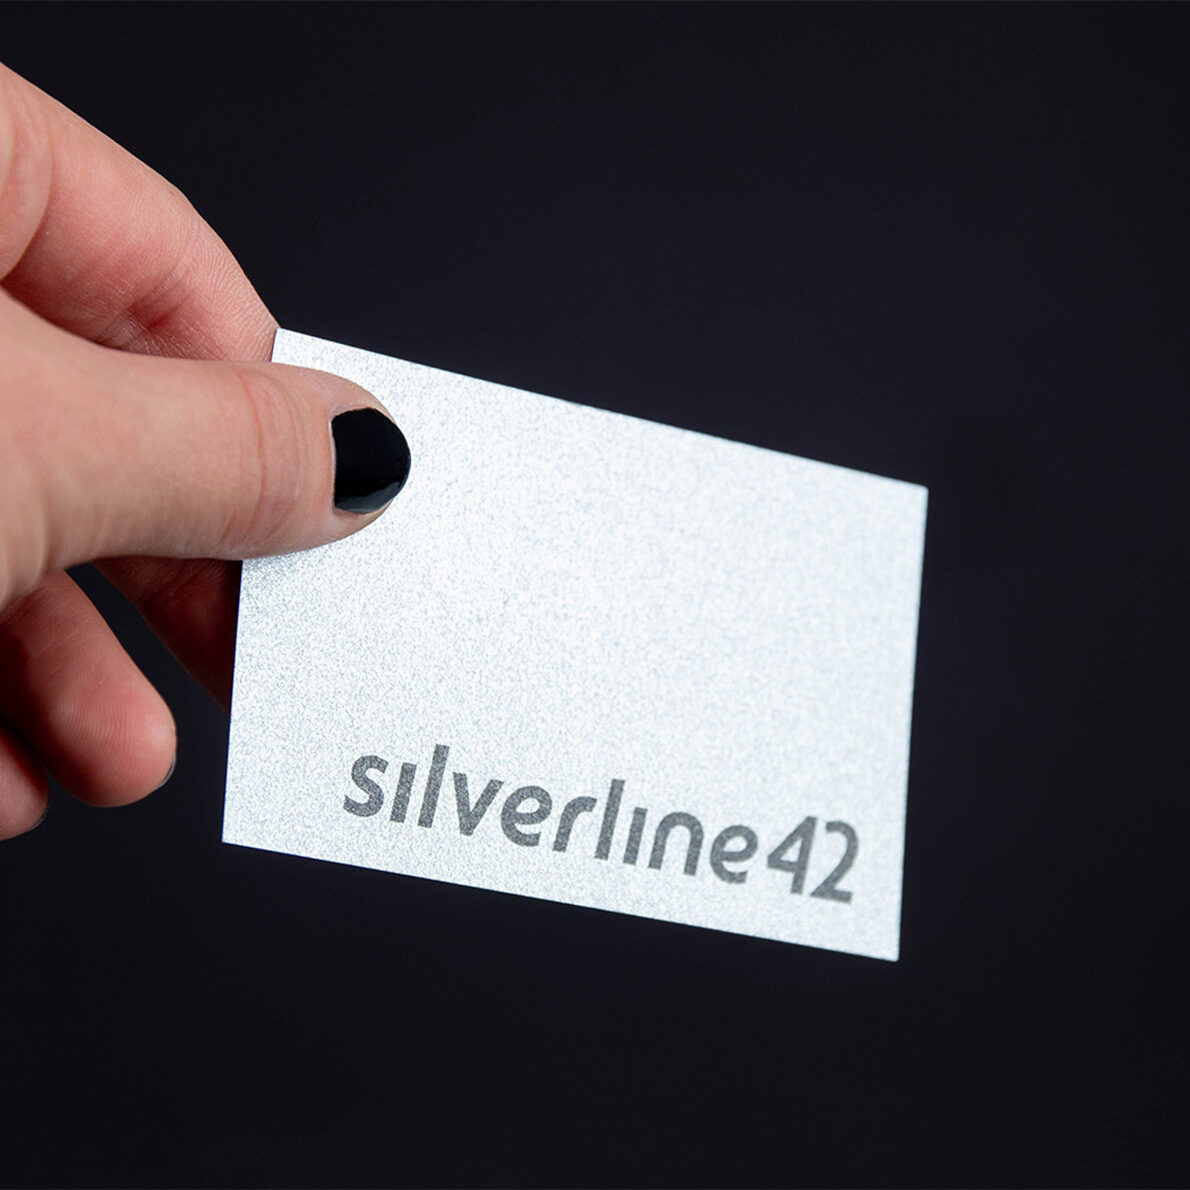 Silverline42 Drucksorten Visitenkarten